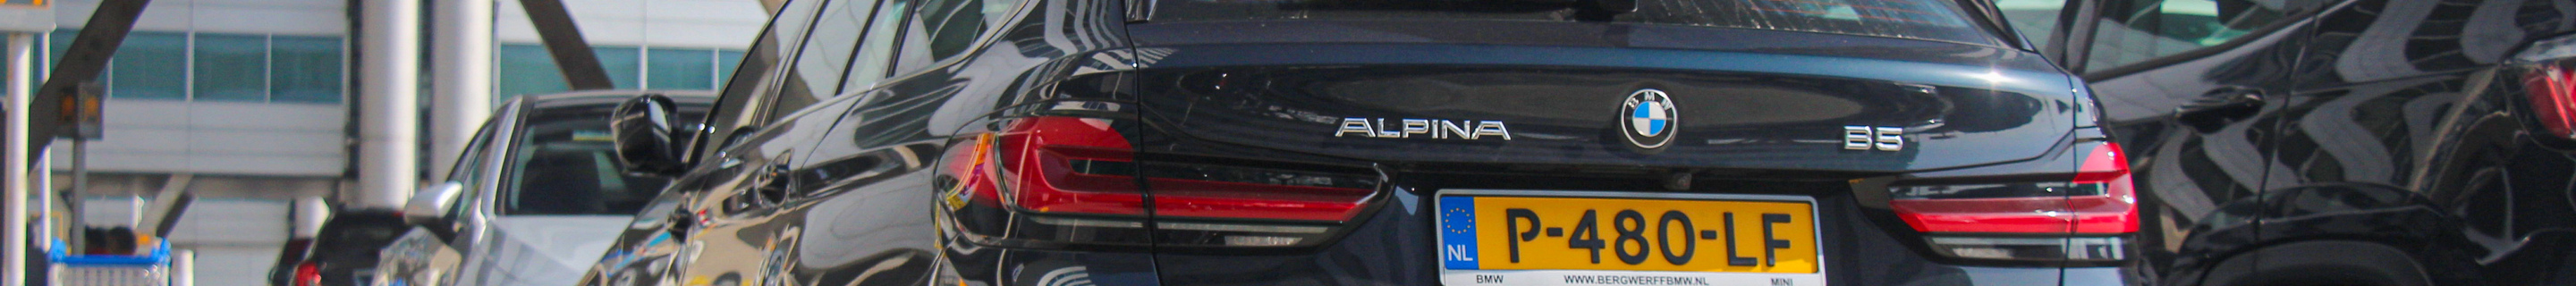 Alpina B5 BiTurbo Touring 2021